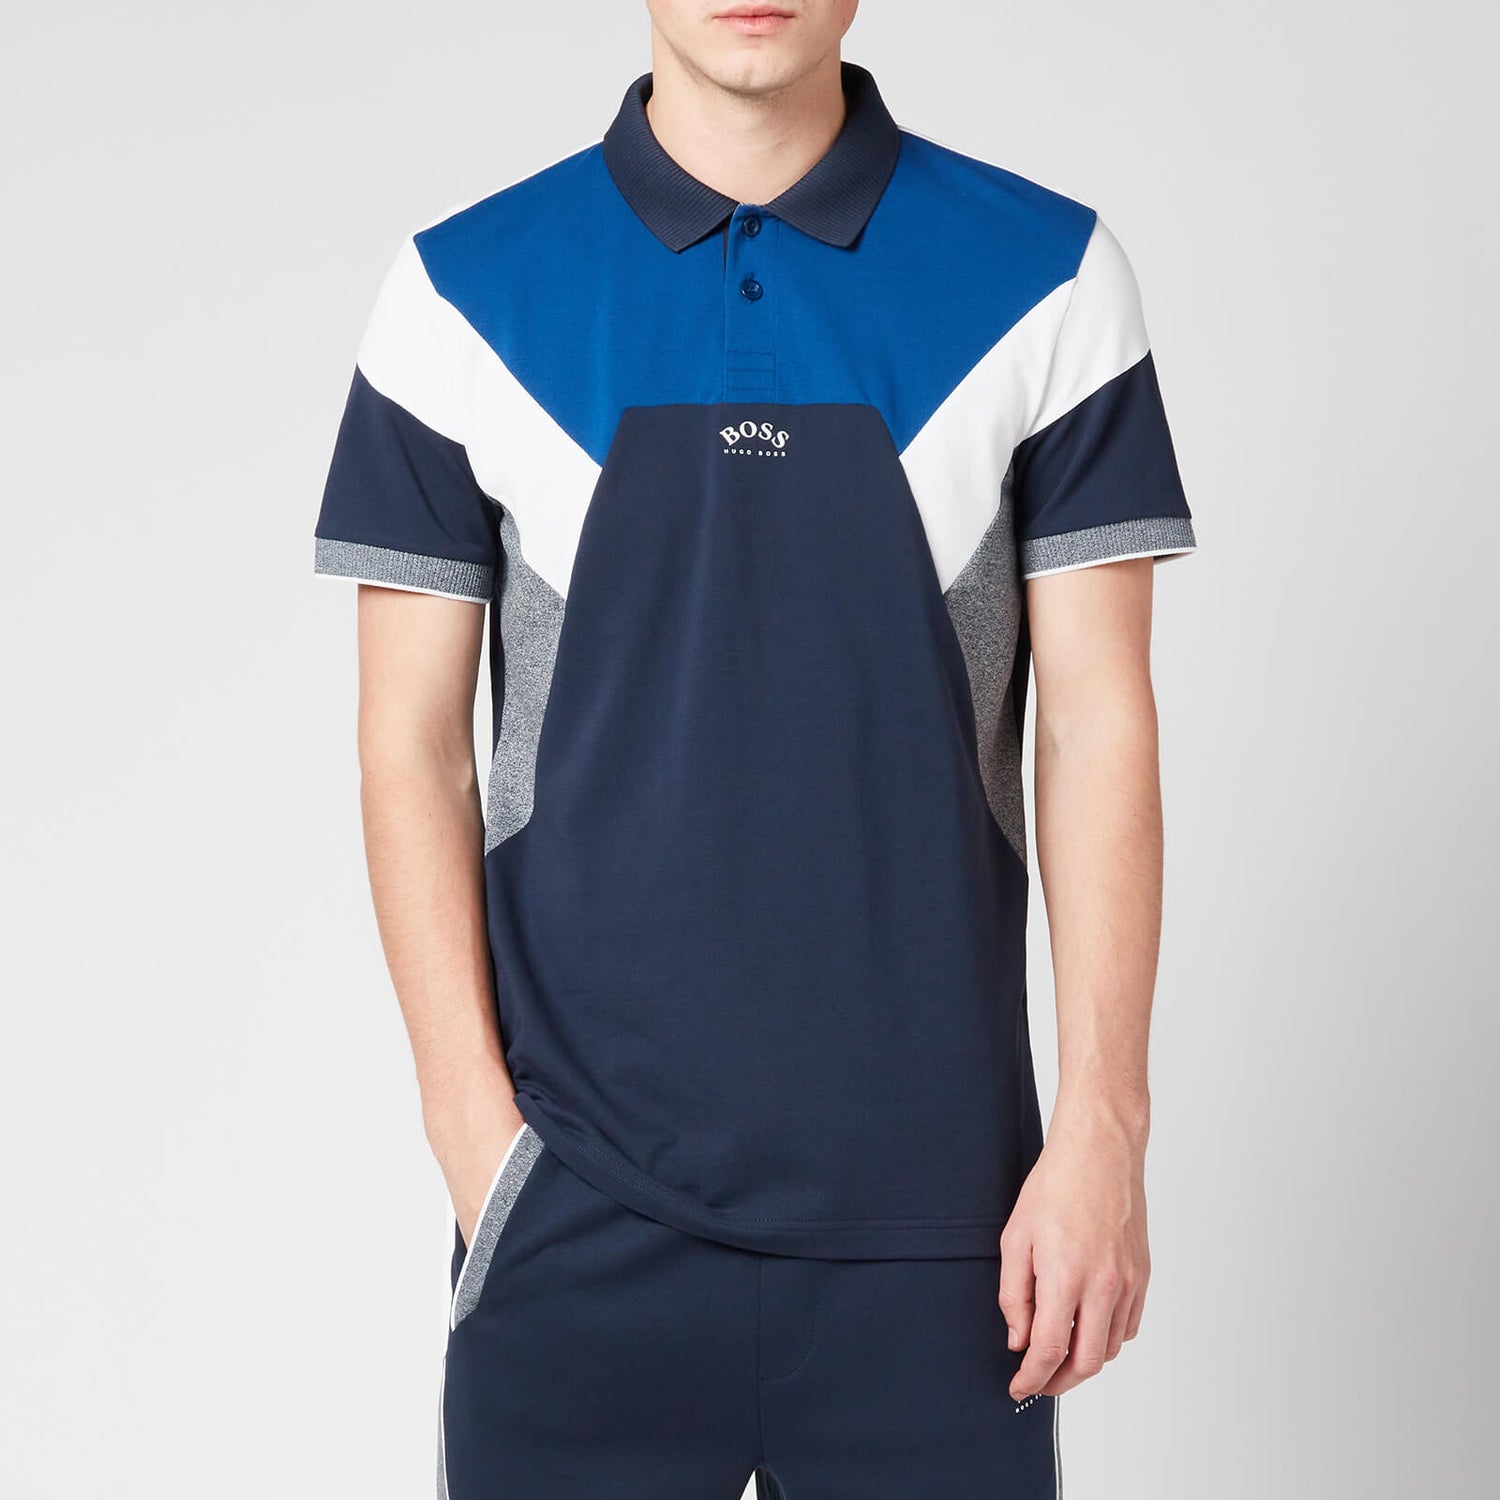 BOSS Athleisure Men's Paule 1 Polo Shirt - Navy - S